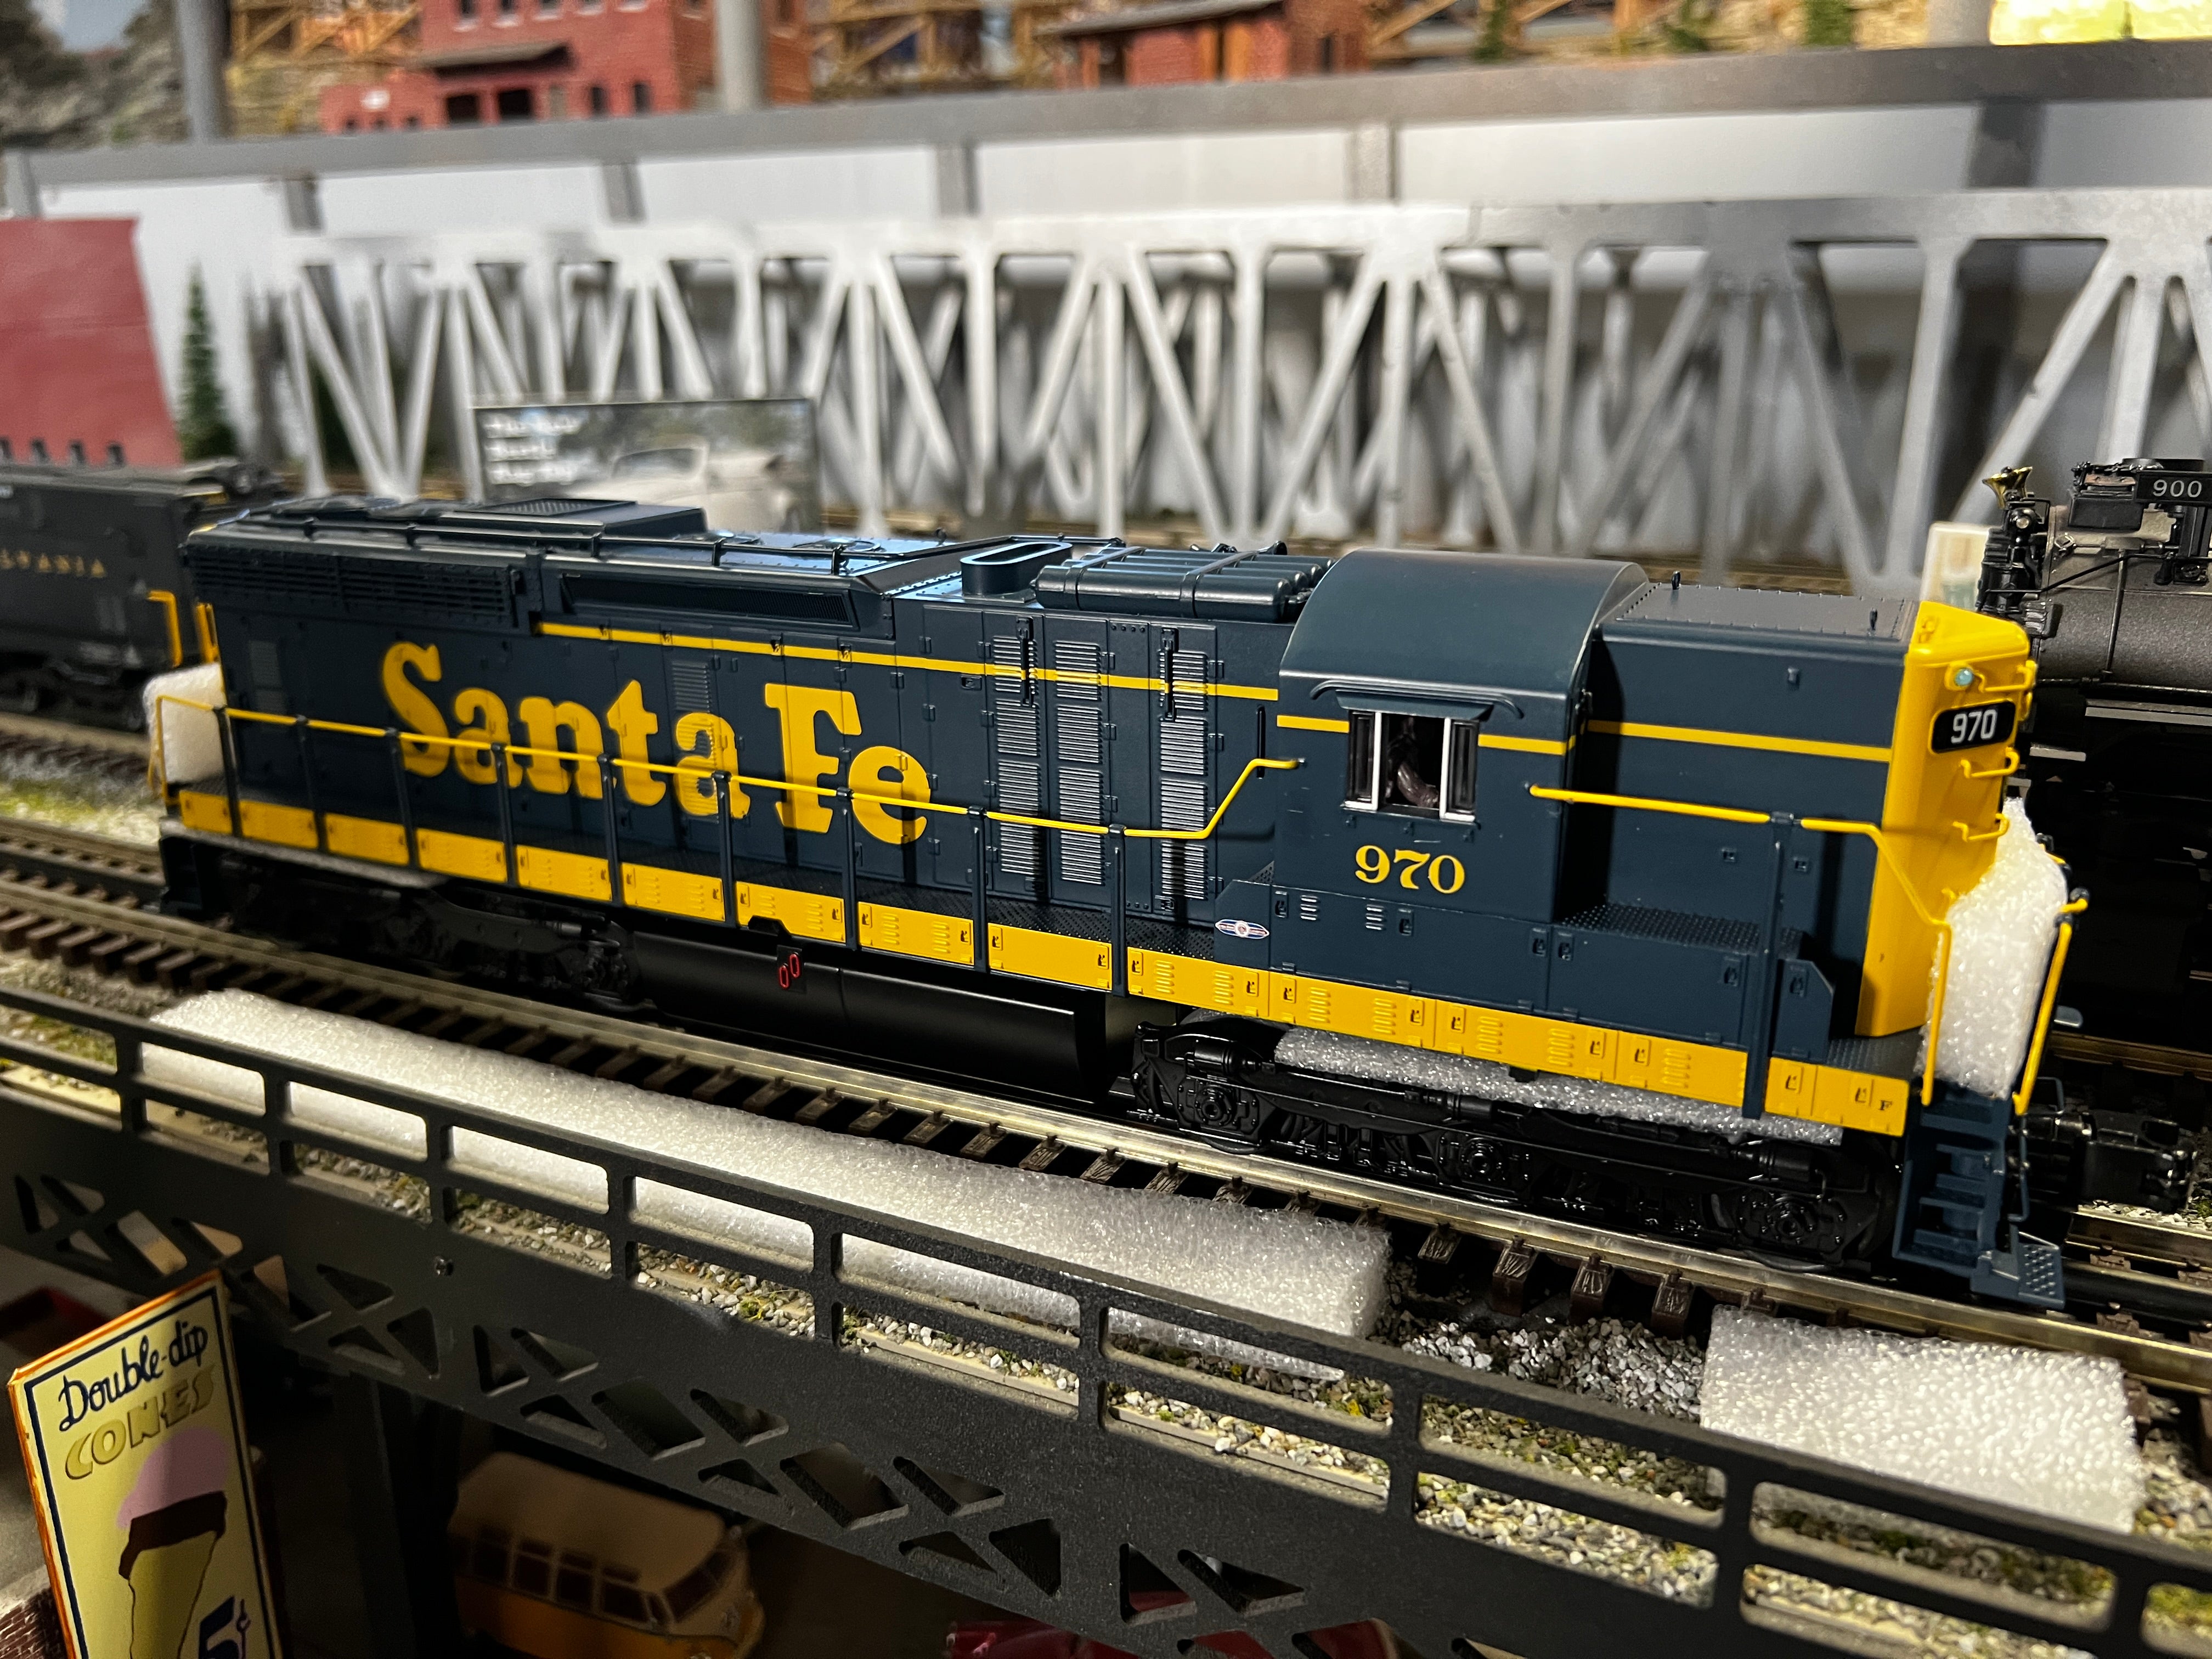 MTH 20-21723-1 - SD24 Diesel Engine "Santa Fe" #970 w/ PS3